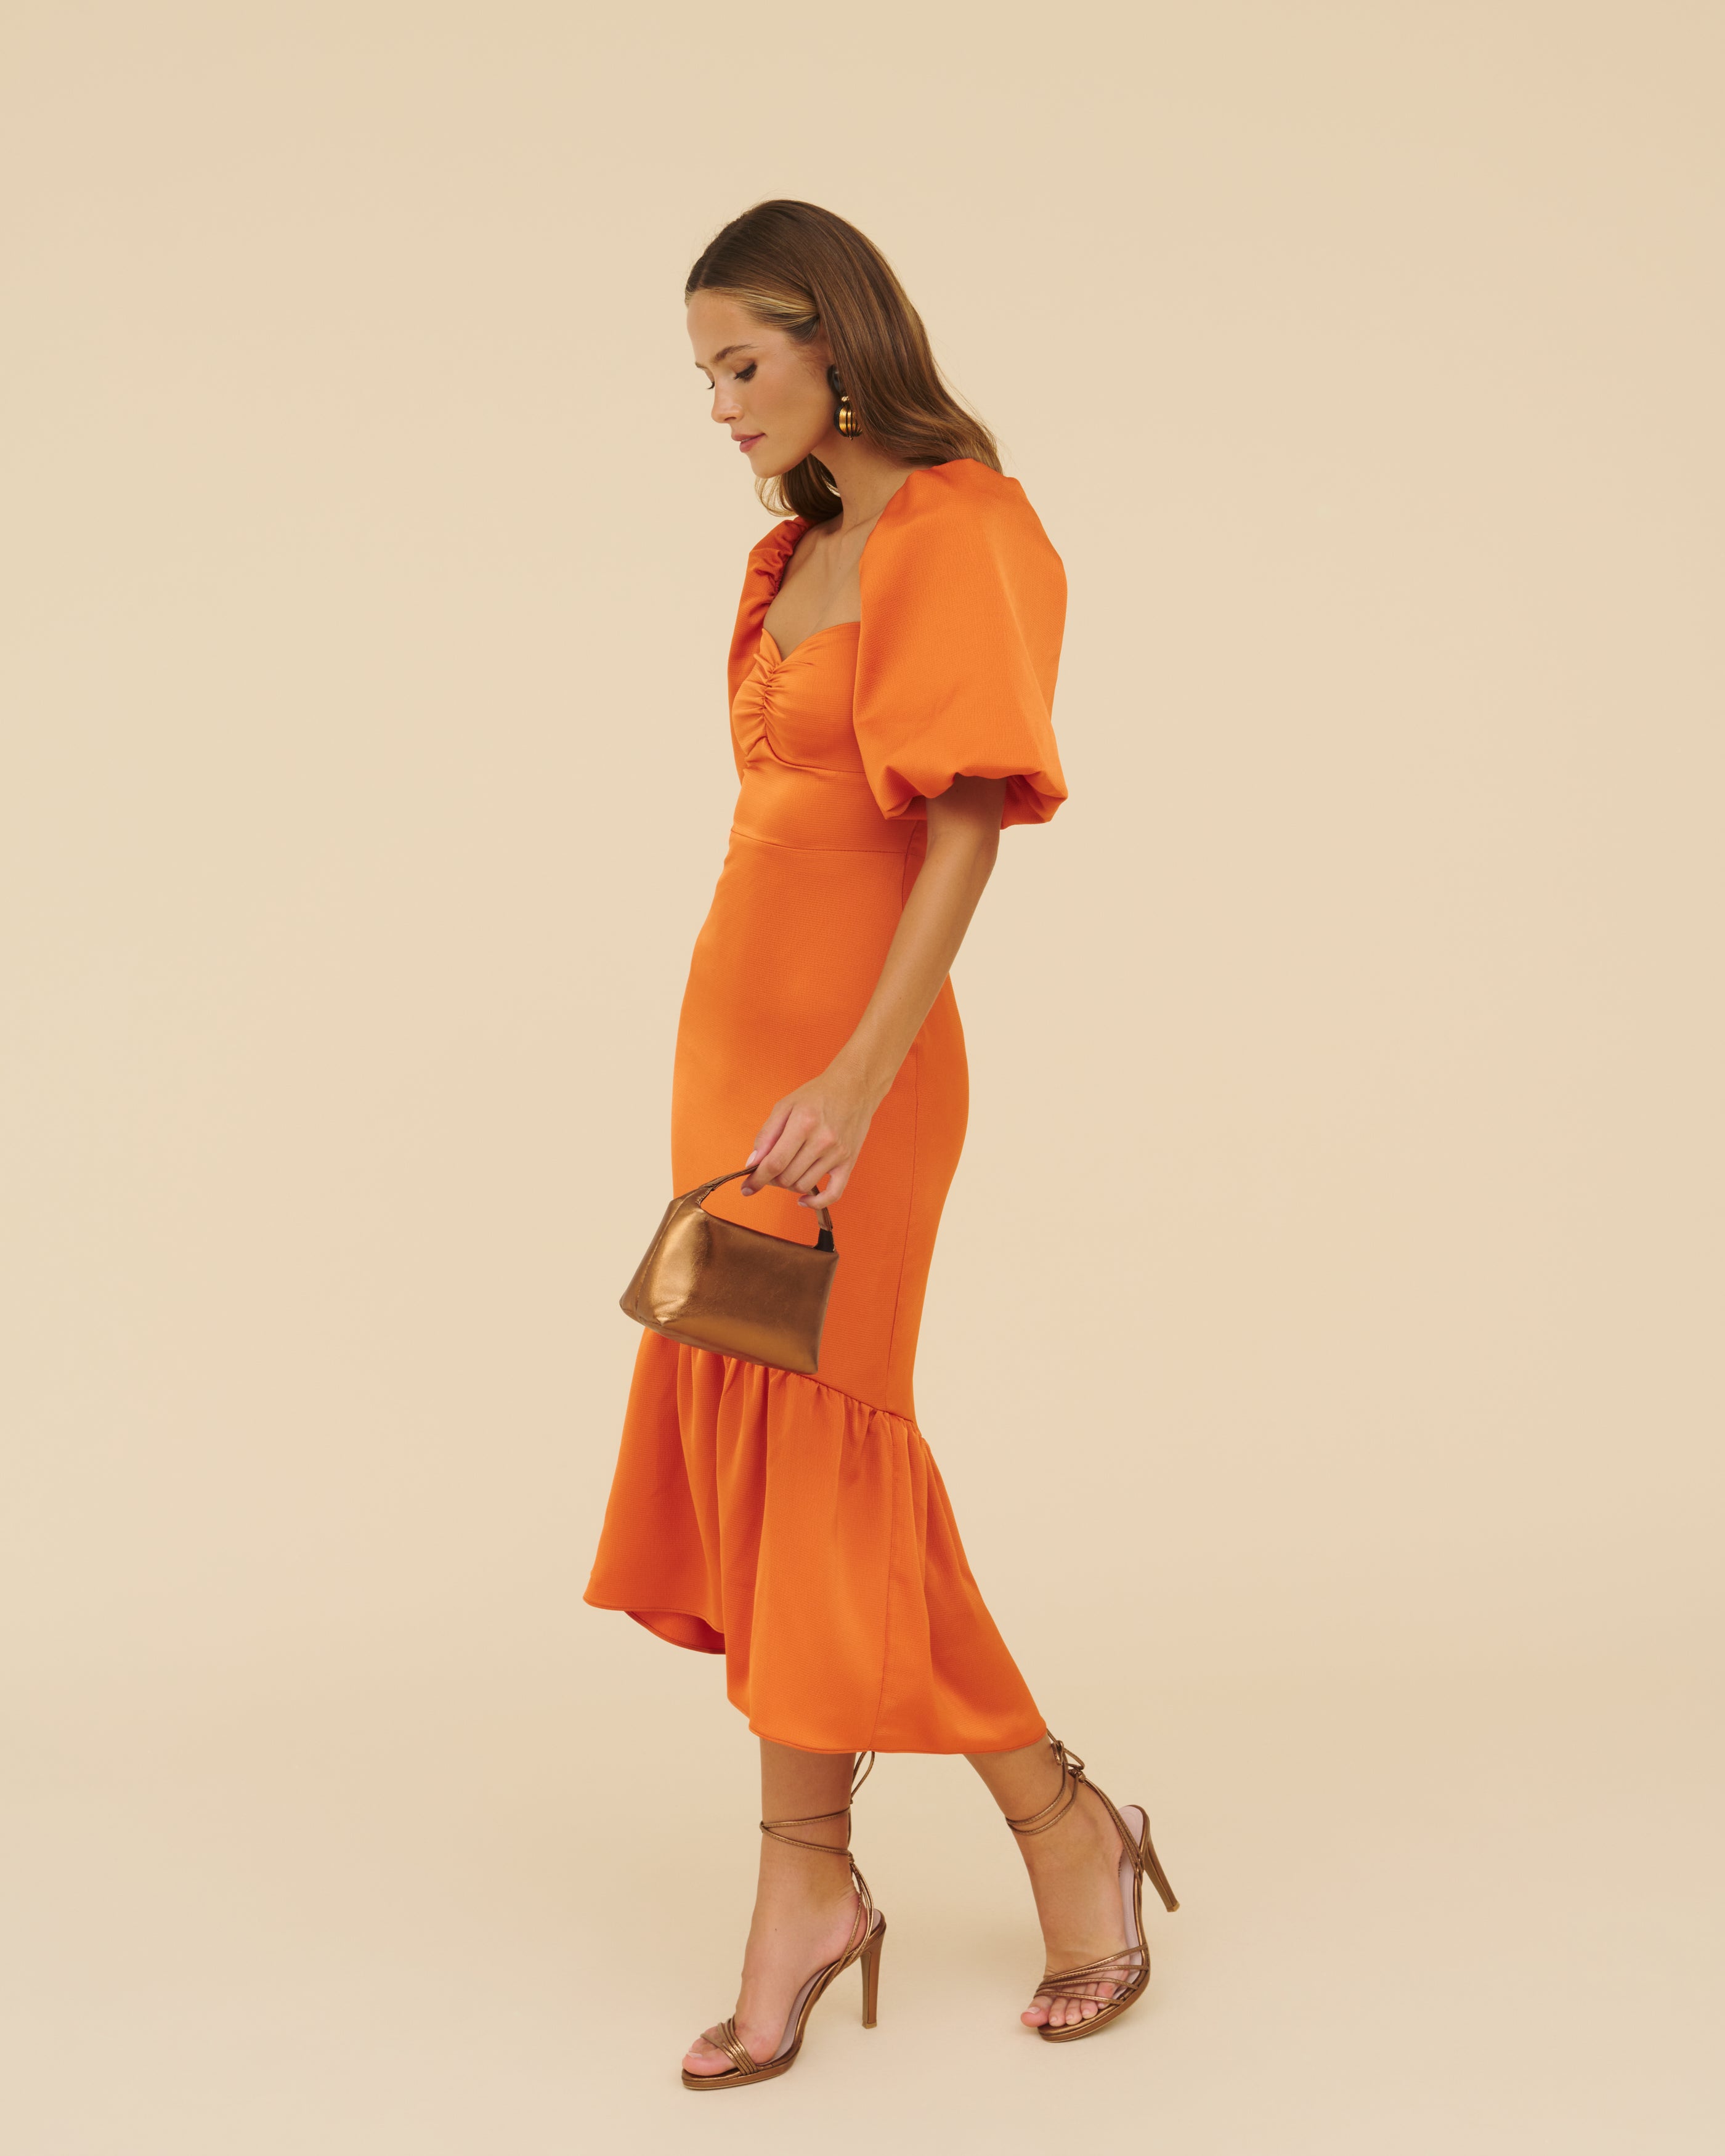 Luciana Russet Orange Dress